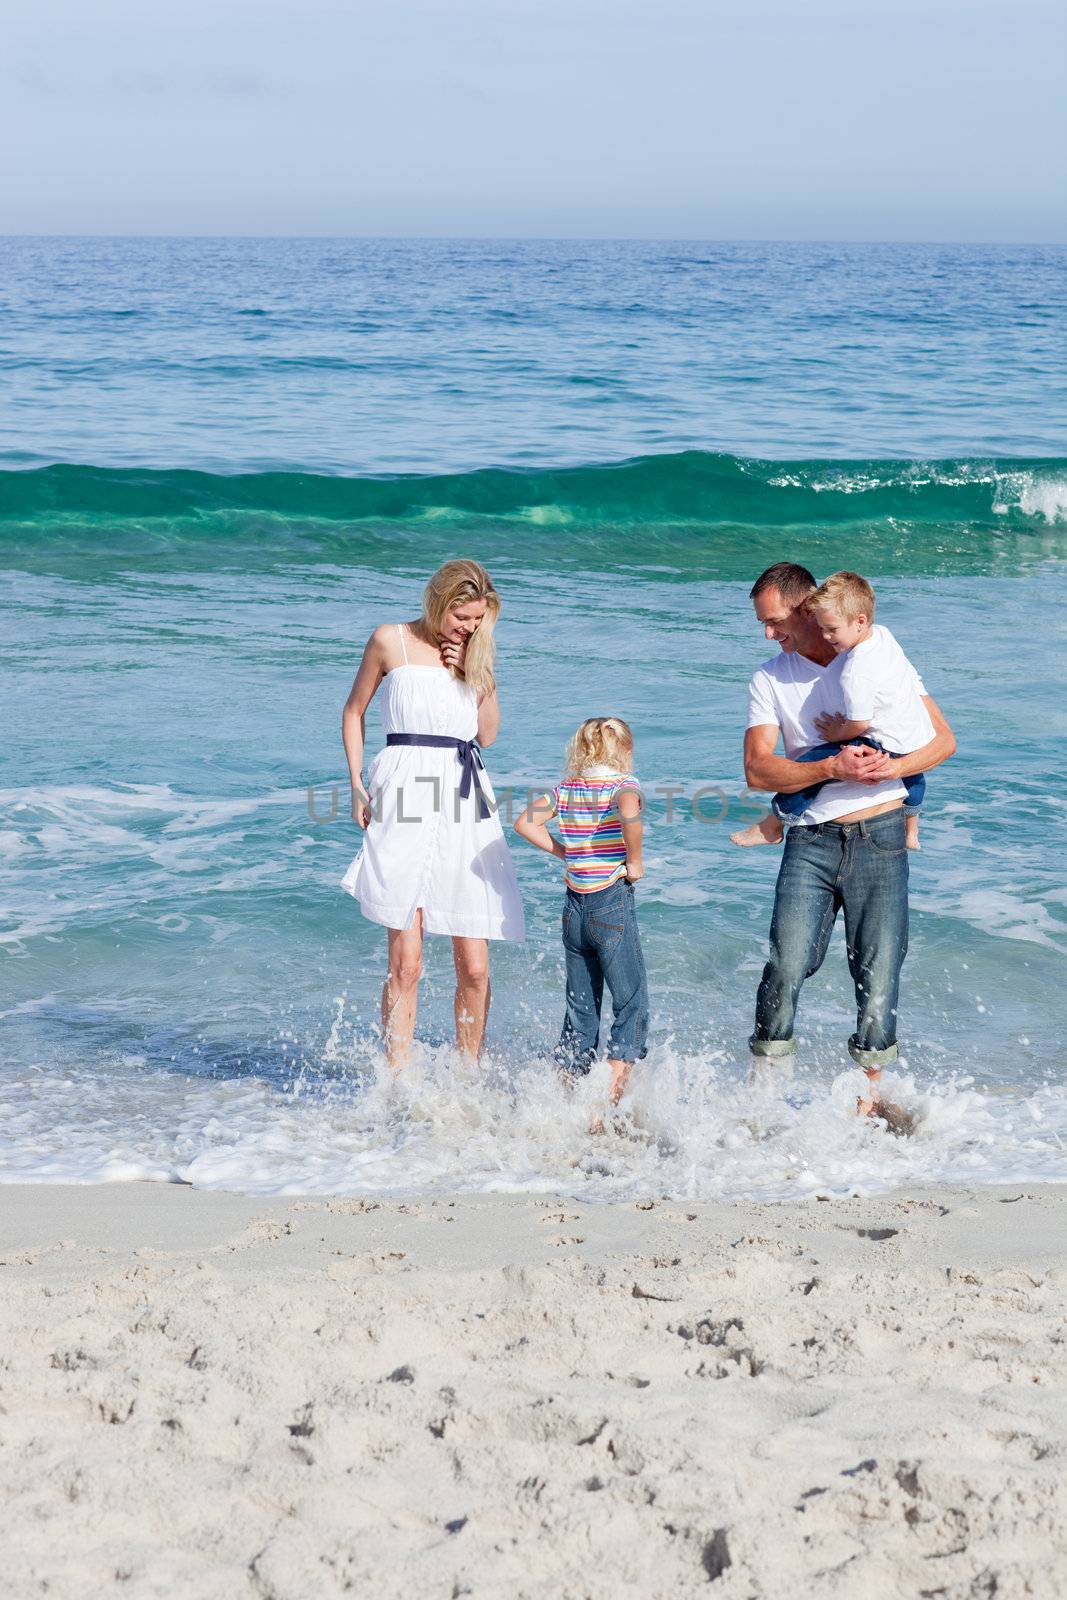 Cheerful family having fun at the beach by Wavebreakmedia